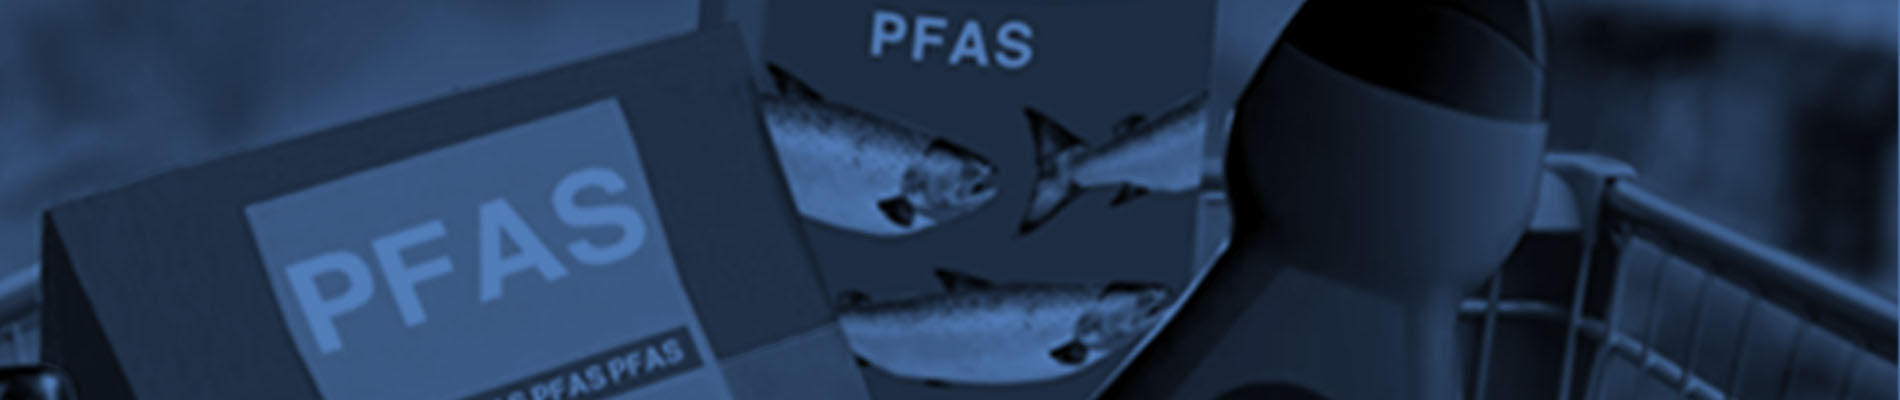 PFAS slider blue